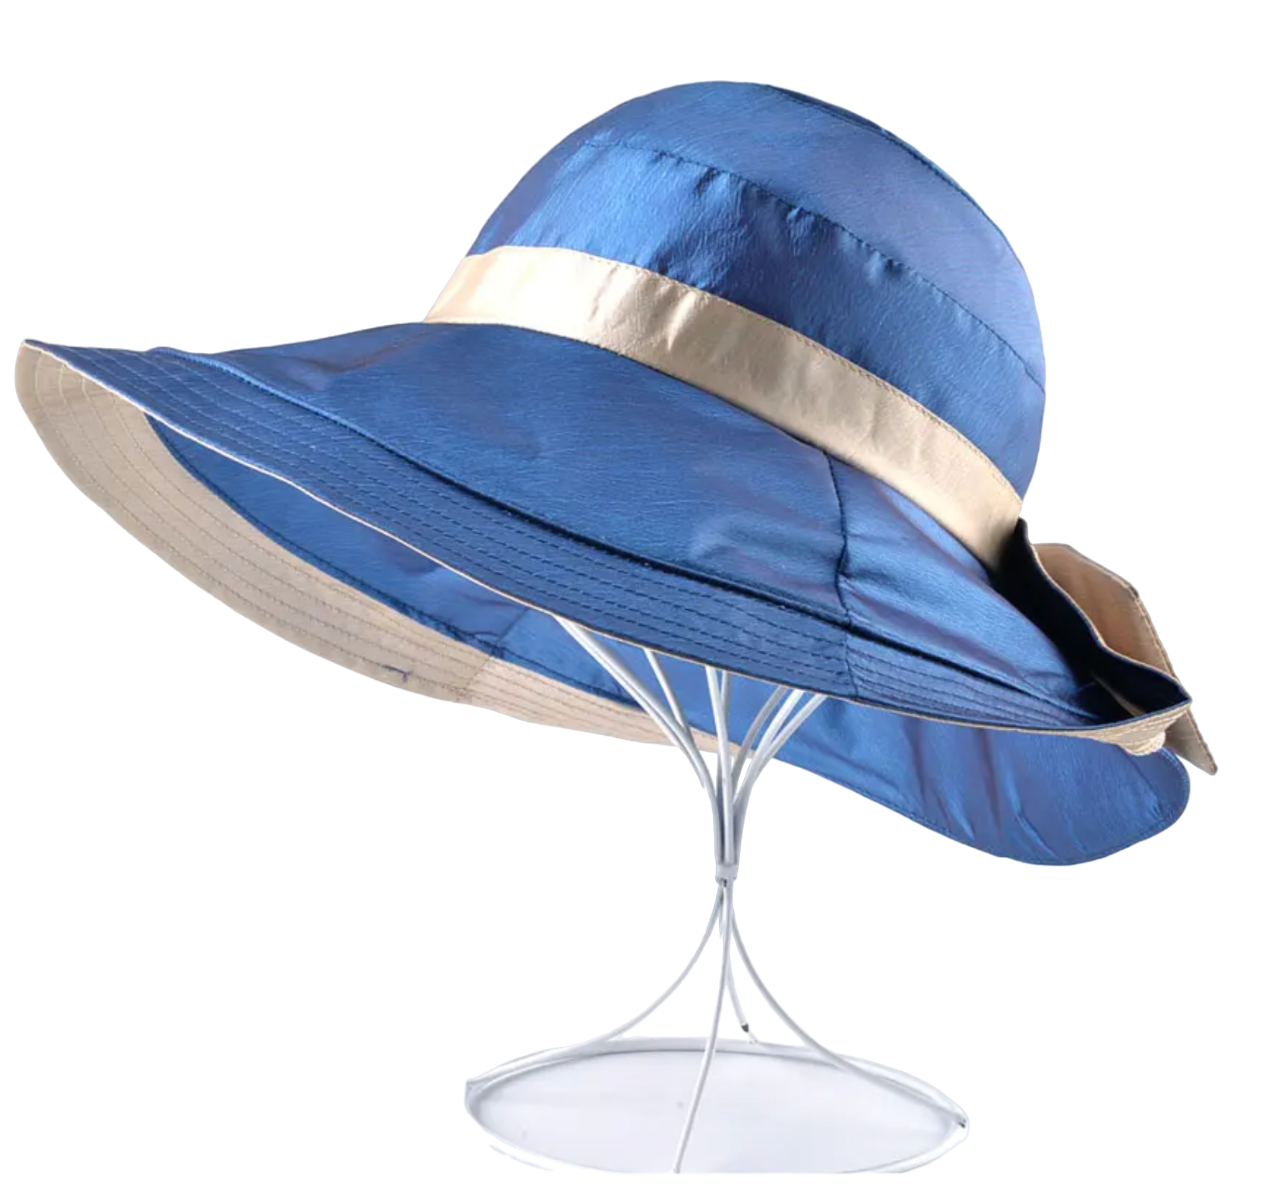 Hat Drag Winfrey (Blue)